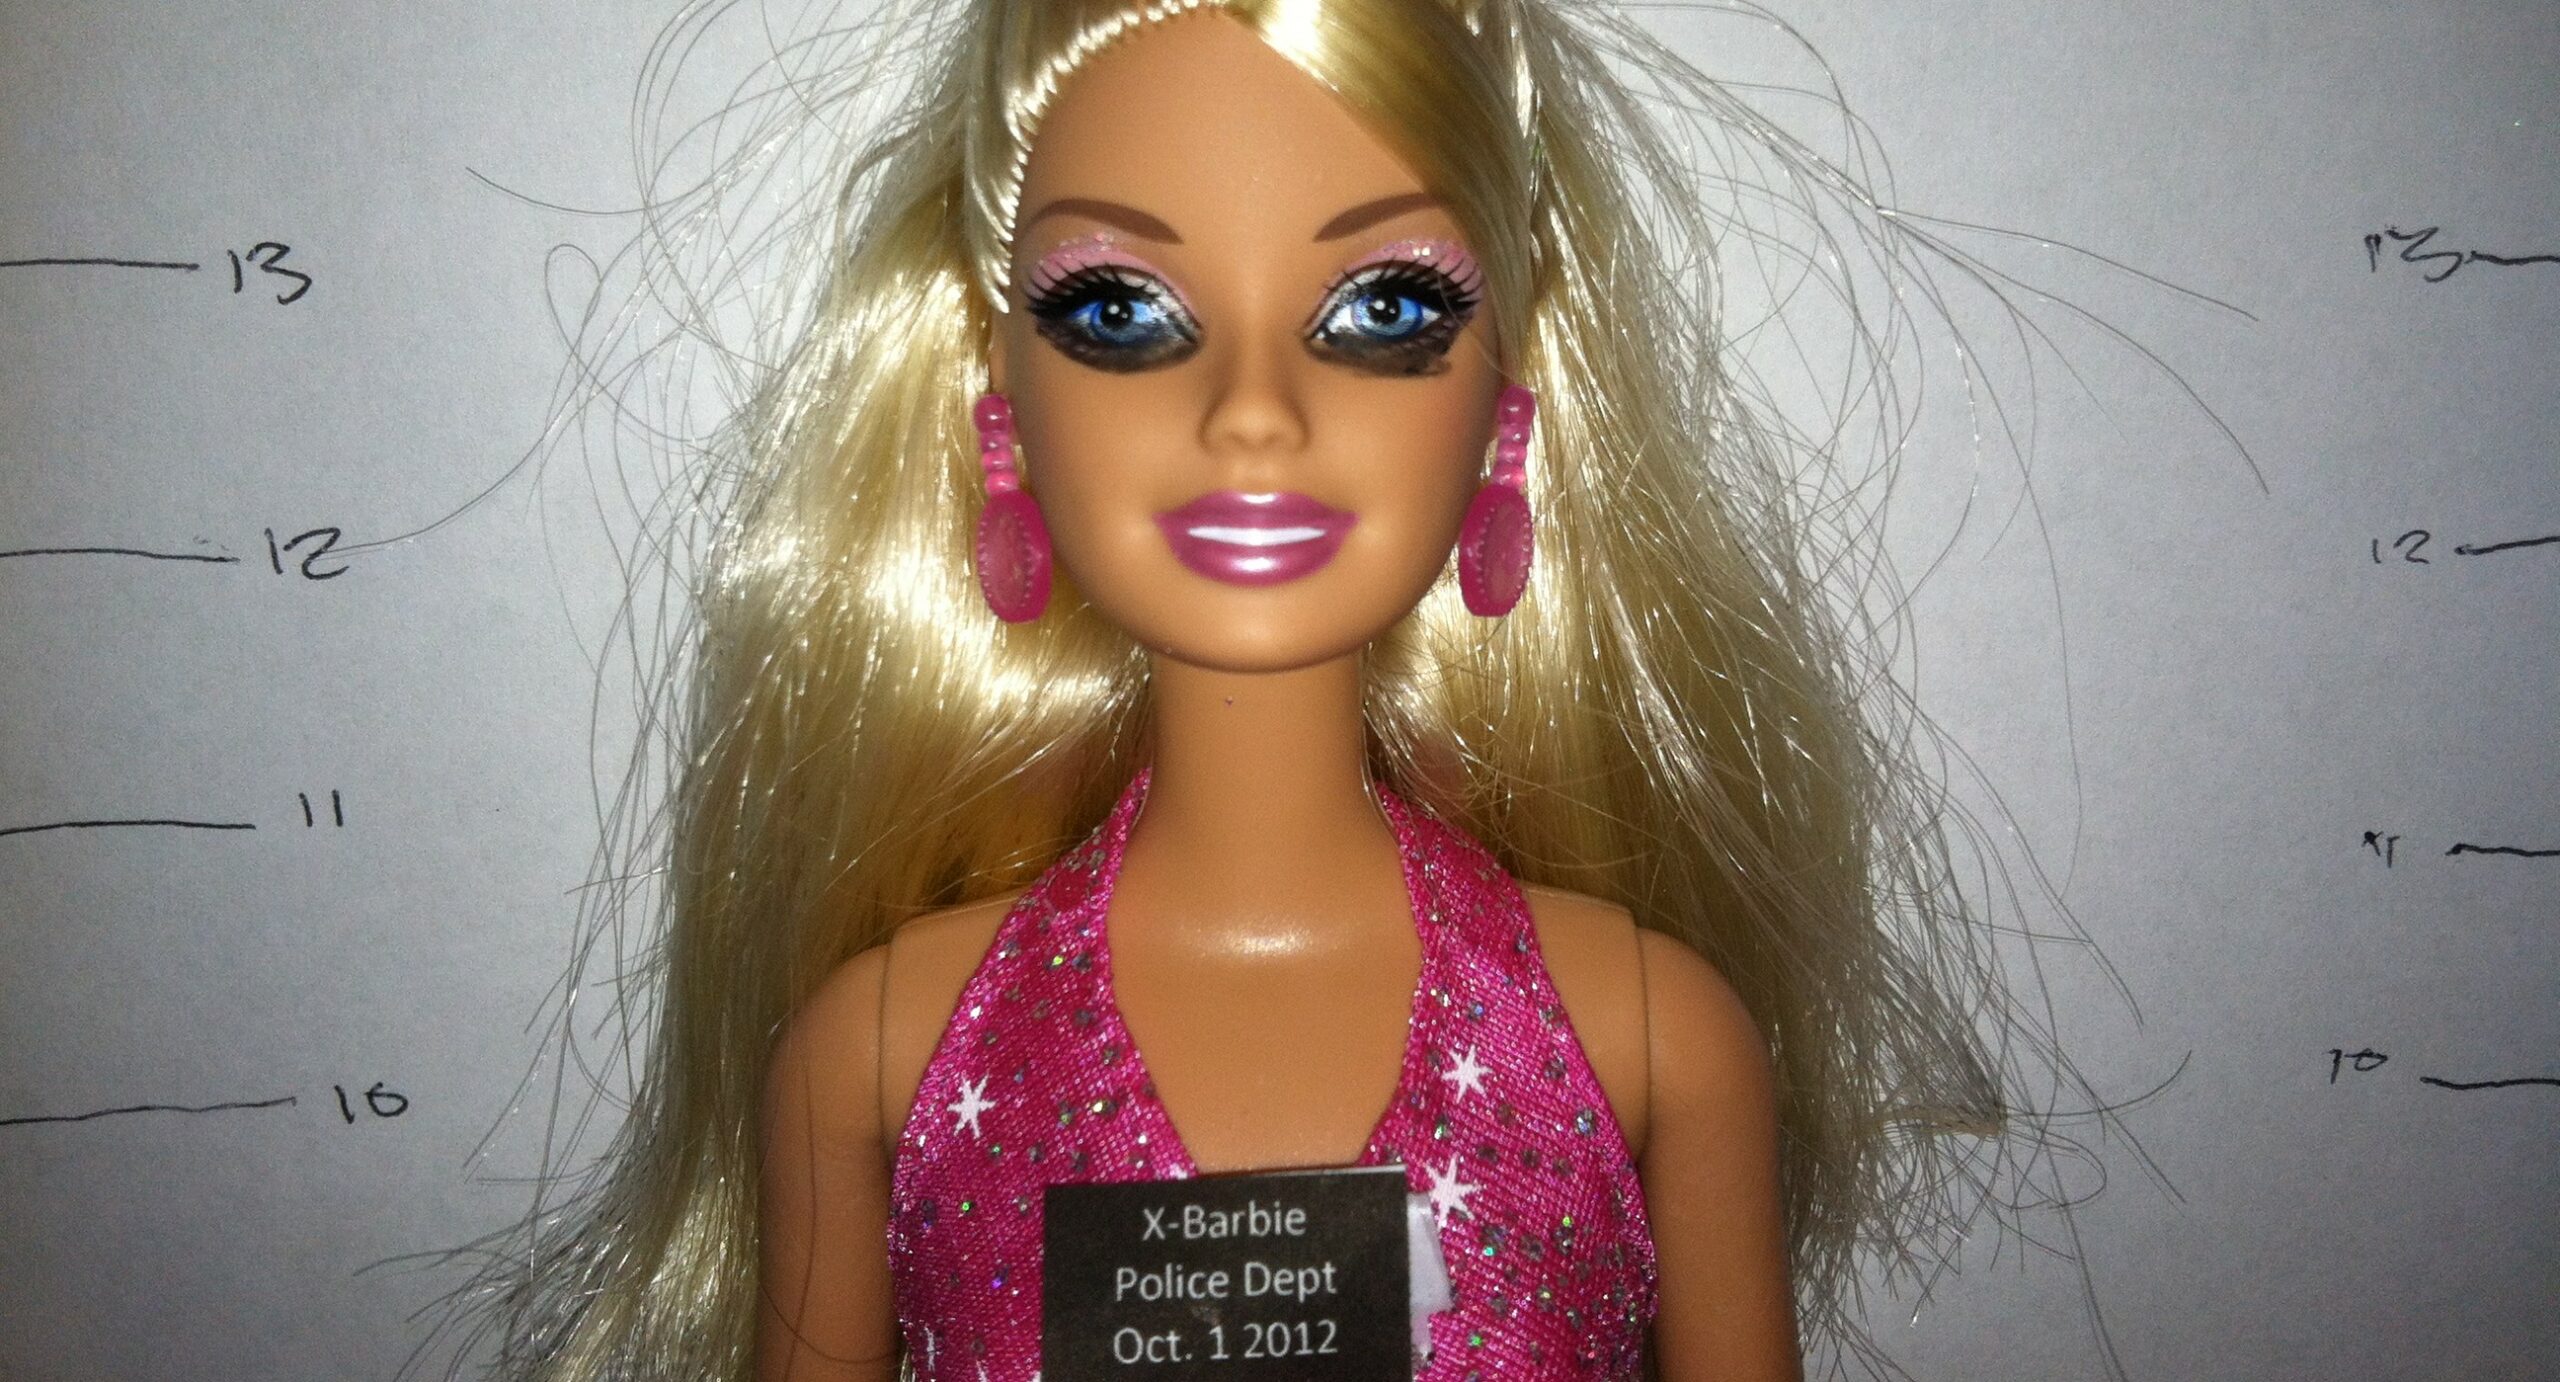 Why is Barbie bad?